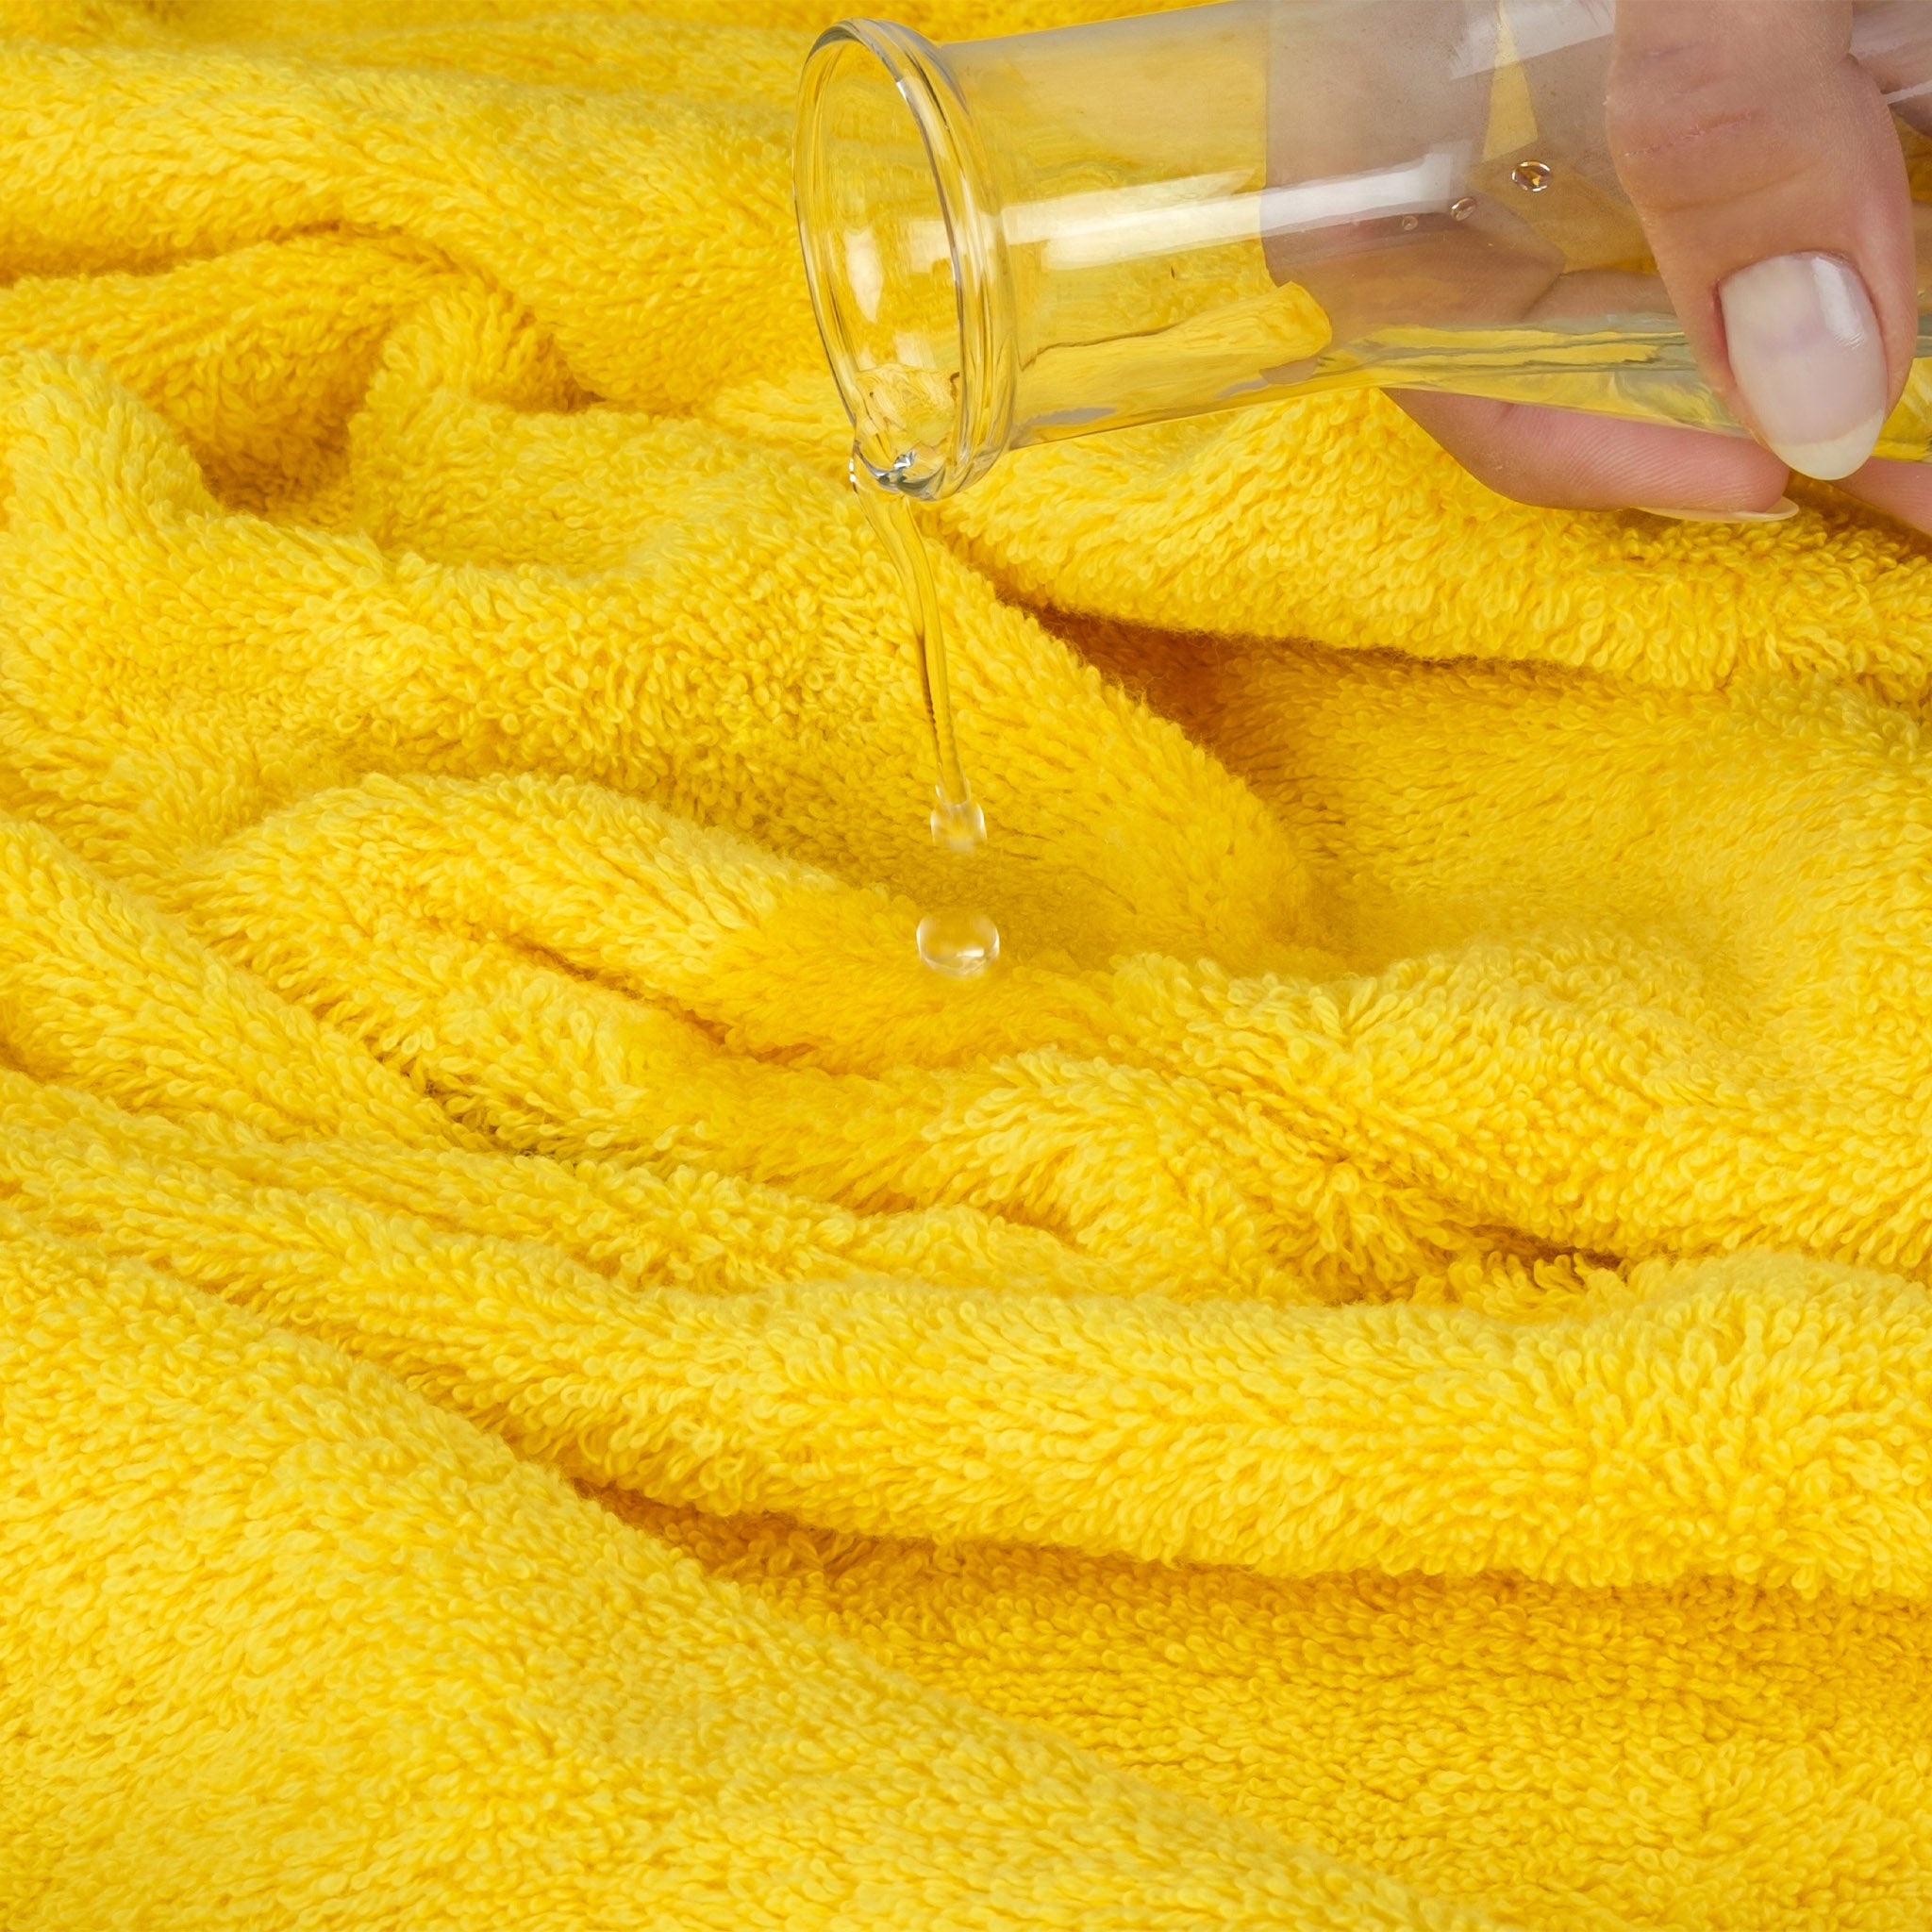  American Soft Linen 100% Turkish Cotton 4 Pack Hand Towel Set  yellow-6